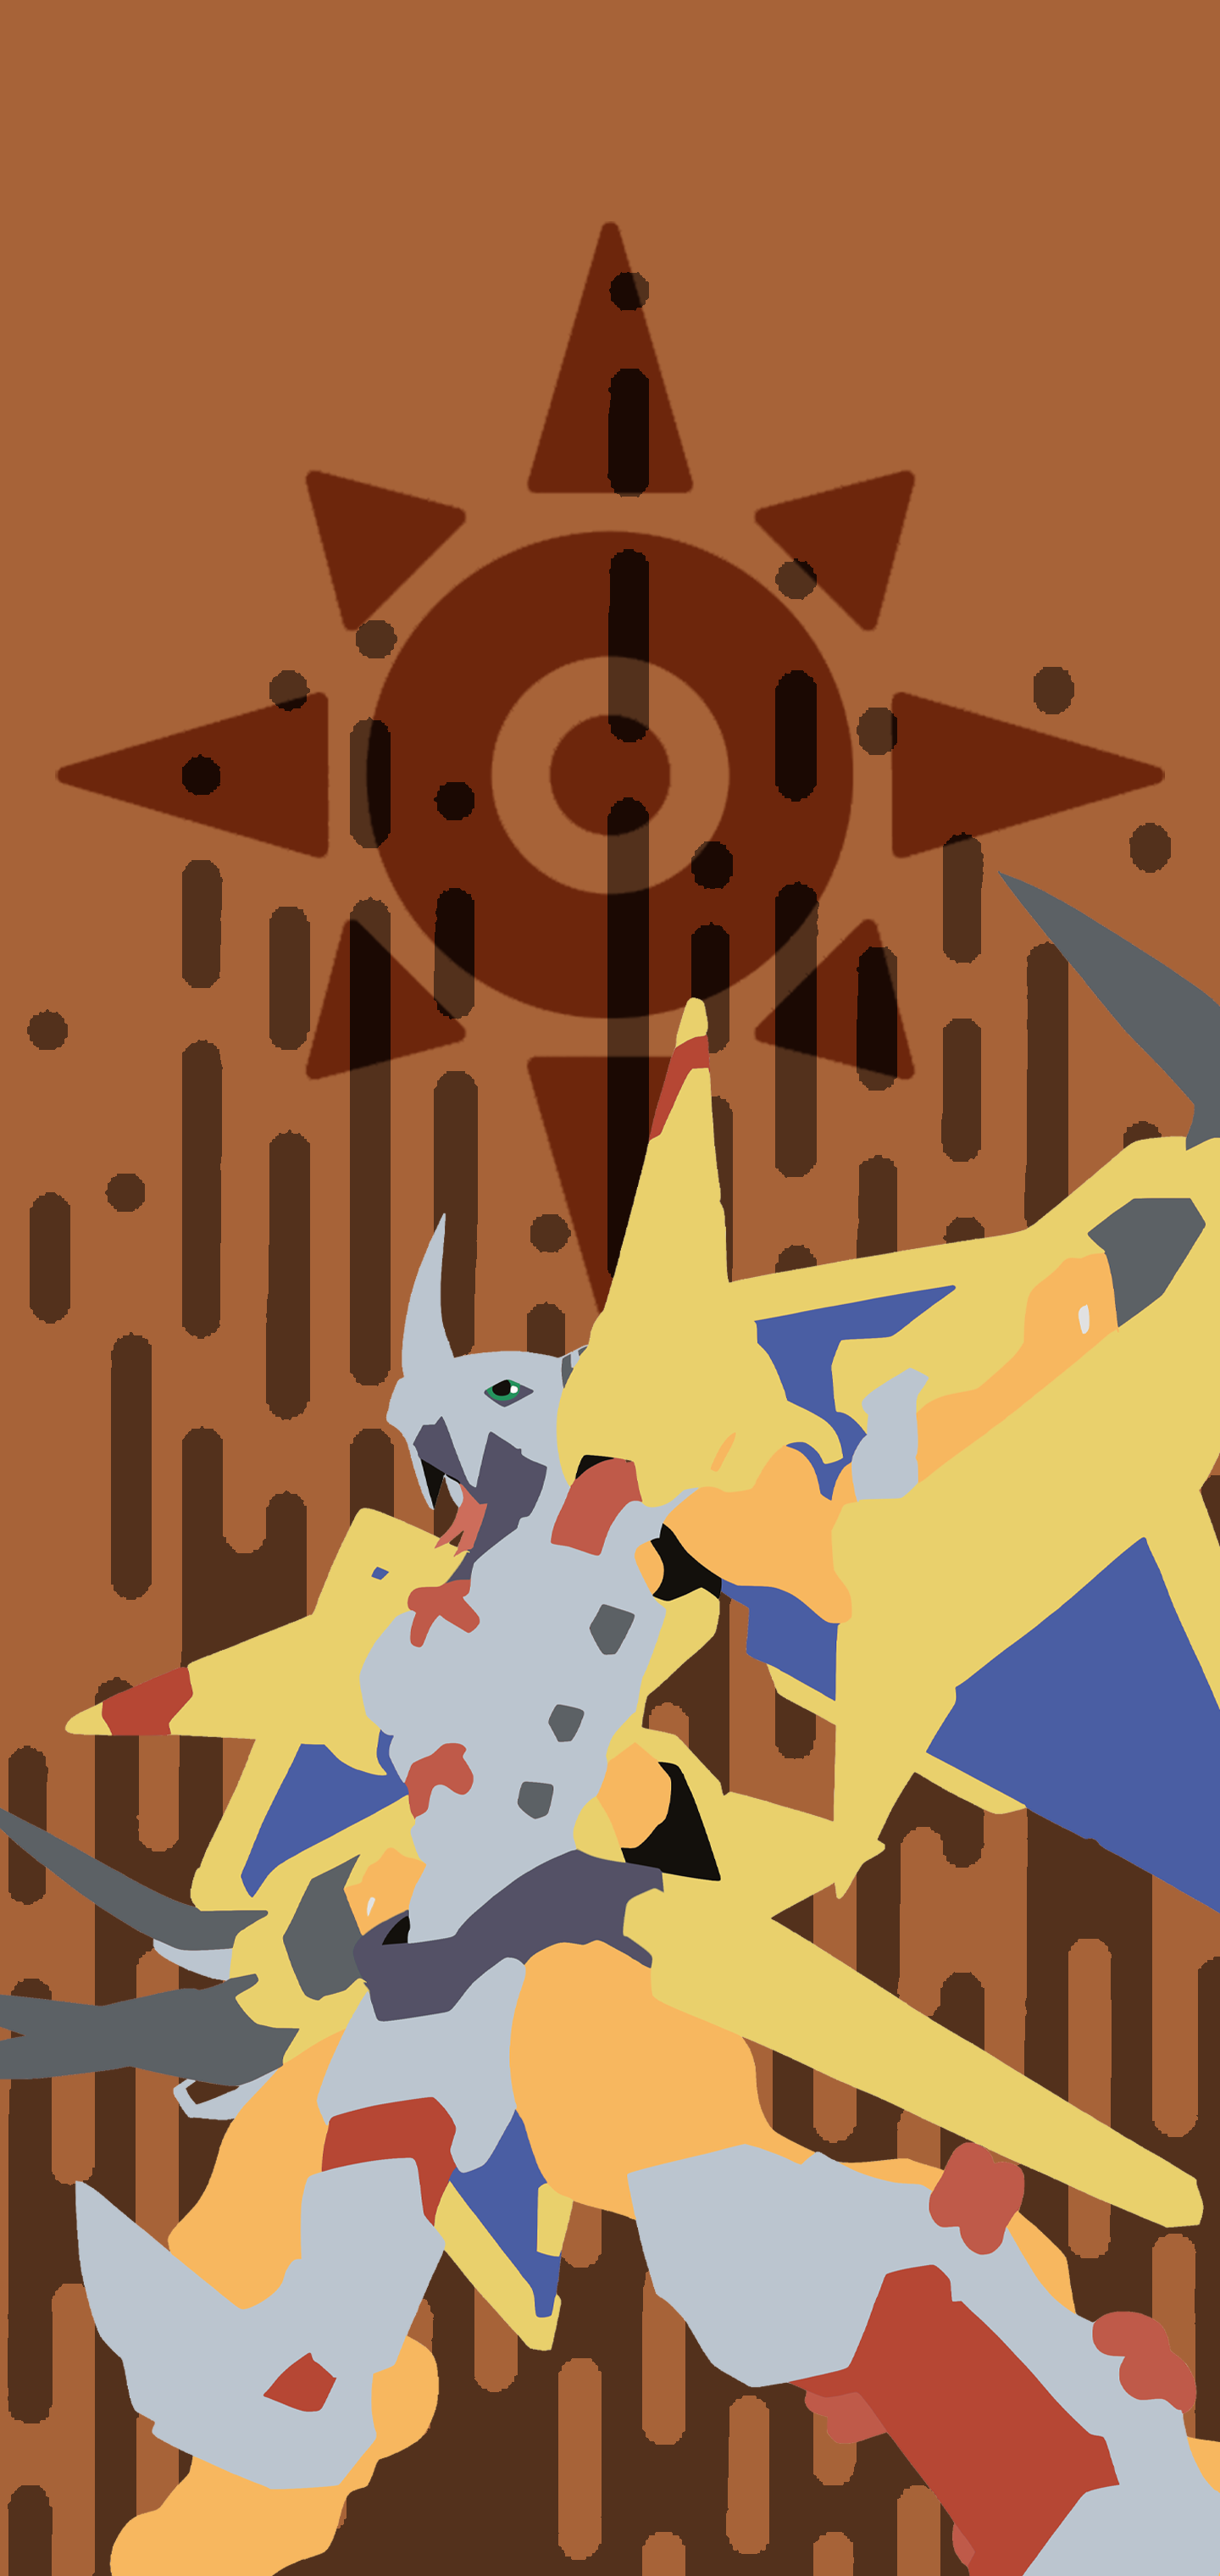 Digimon Wallpapers  Top 20 Best Digimon Wallpapers Download